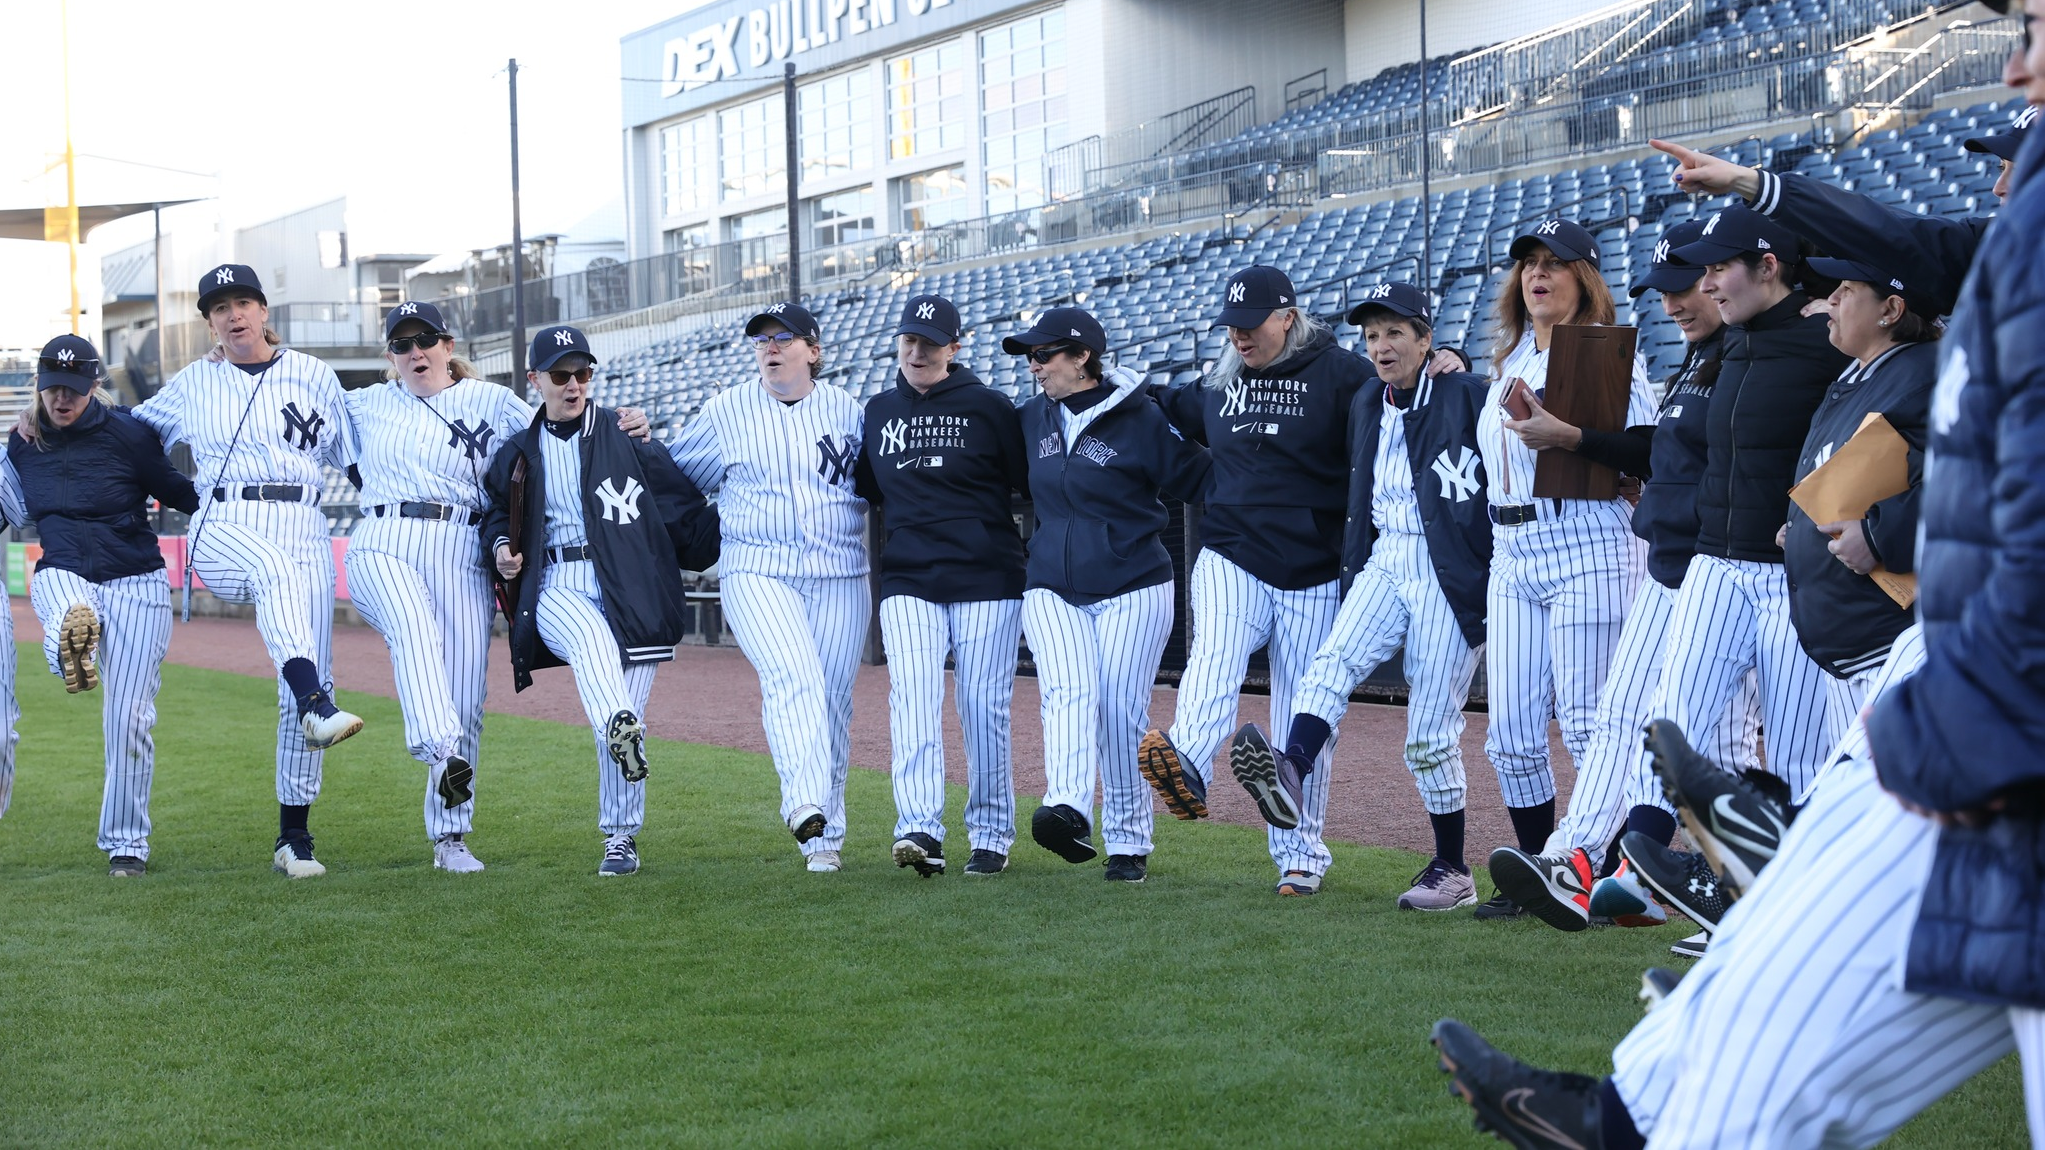 Yankees spring training primer: Inside look at biggest storylines